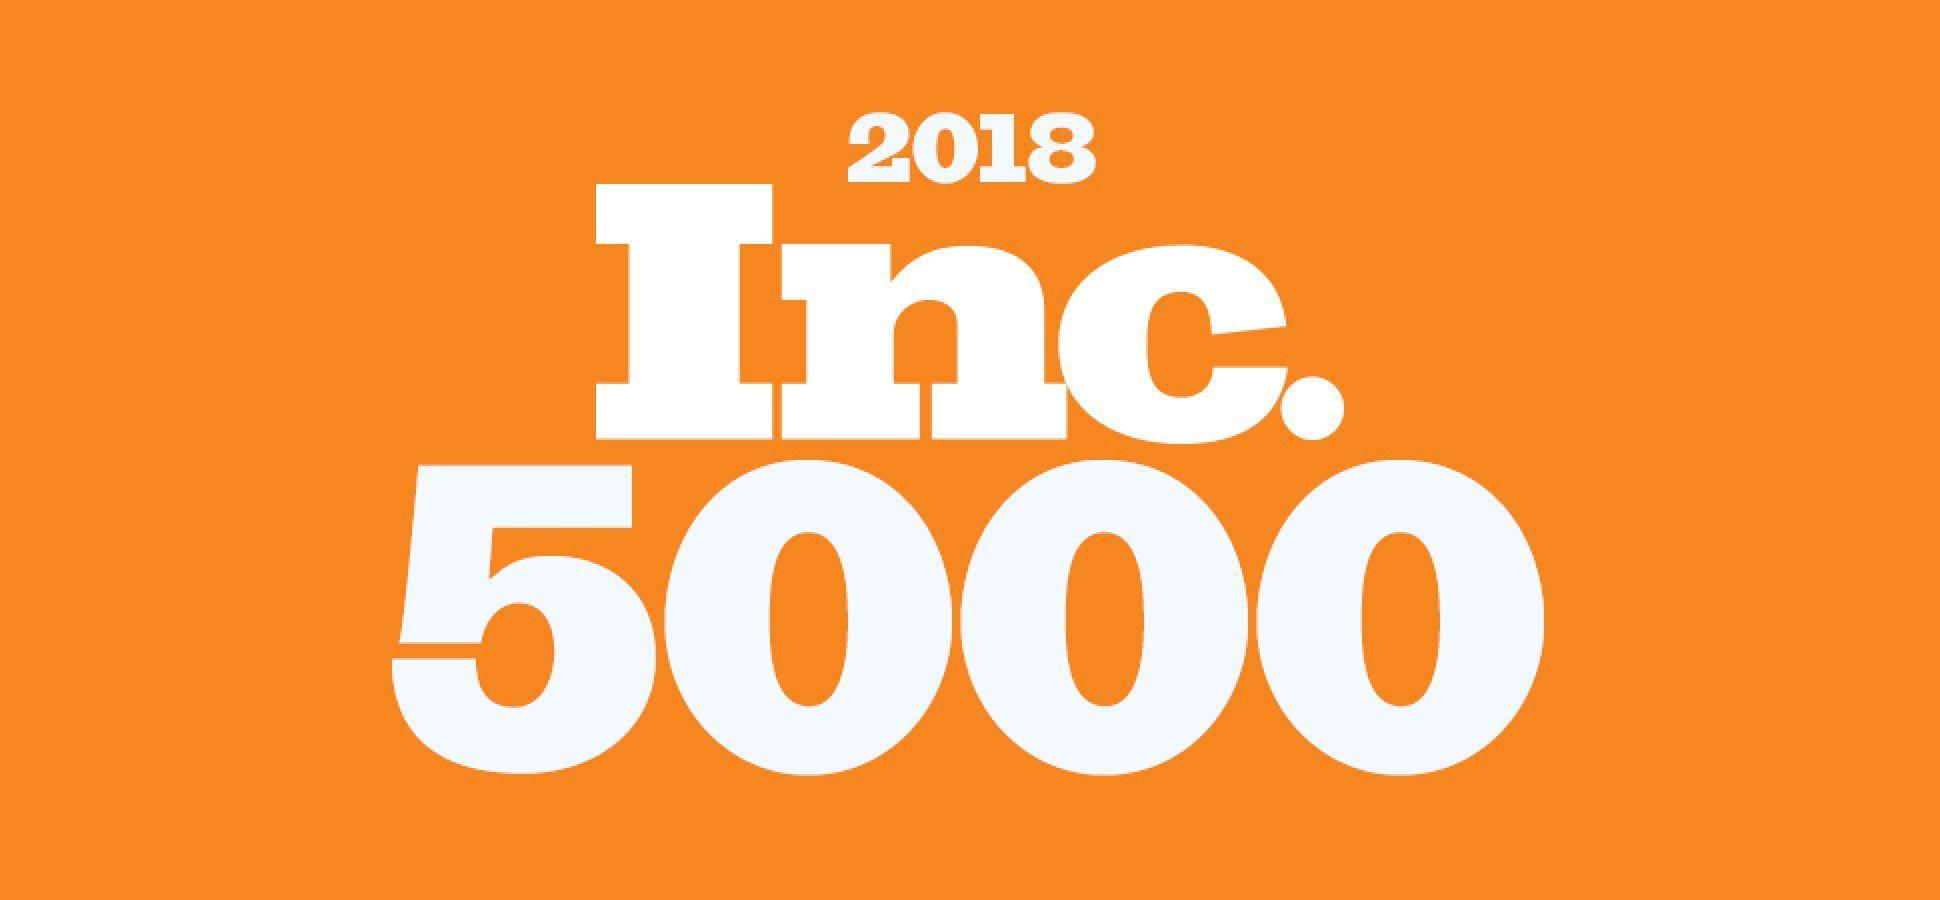 Inc. Logo - Inc. 5000 2018: The Complete Rankings